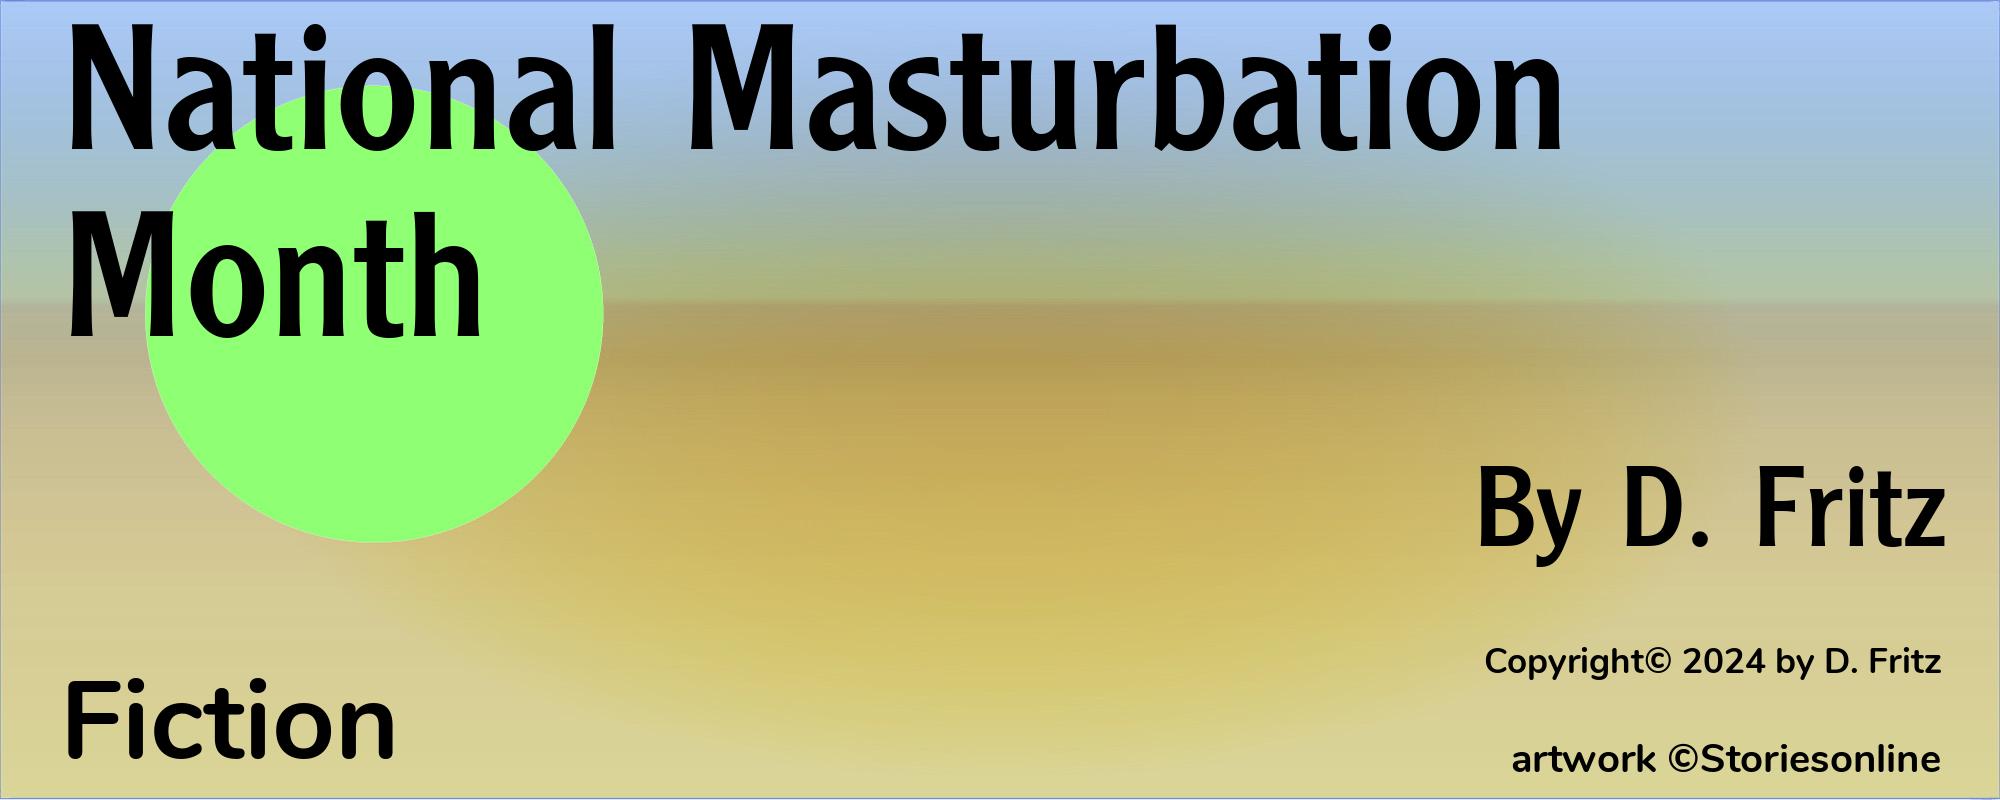 National Masturbation Month - Cover